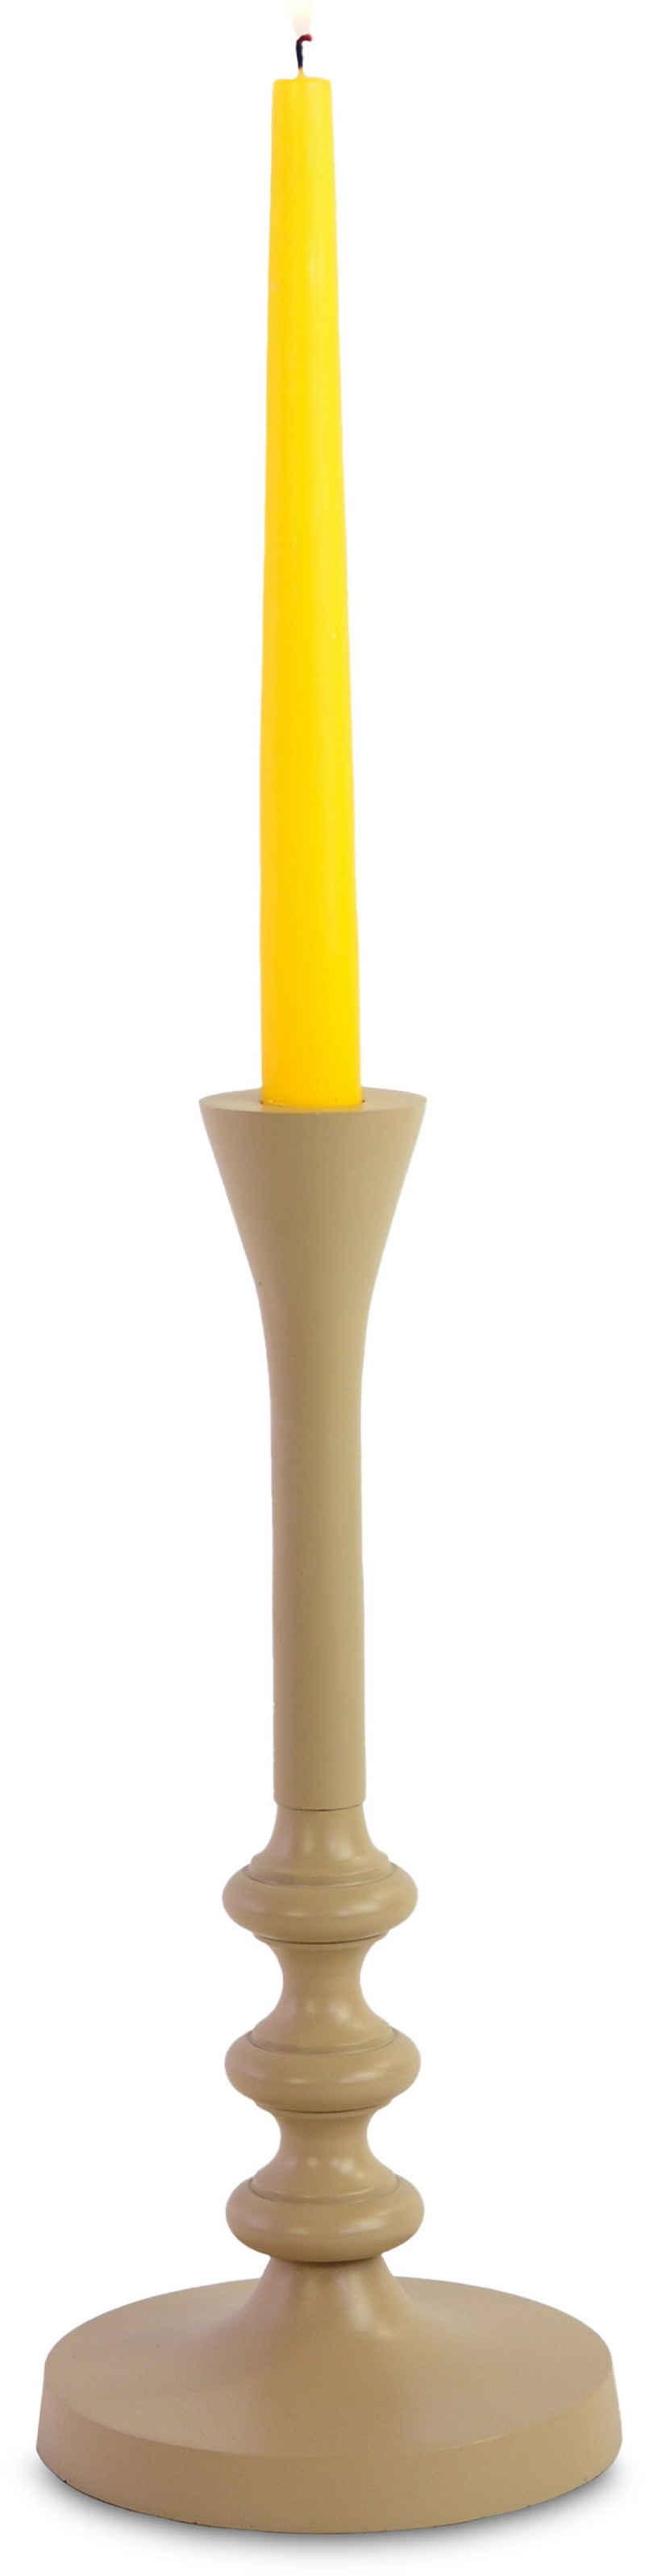 RIFFELMACHER & WEINBERGER Kerzenhalter »Weihnachtsdeko«, Kerzenleuchter, Kerzenständer, aus Aluminium, grau matt, Höhe 30 cm